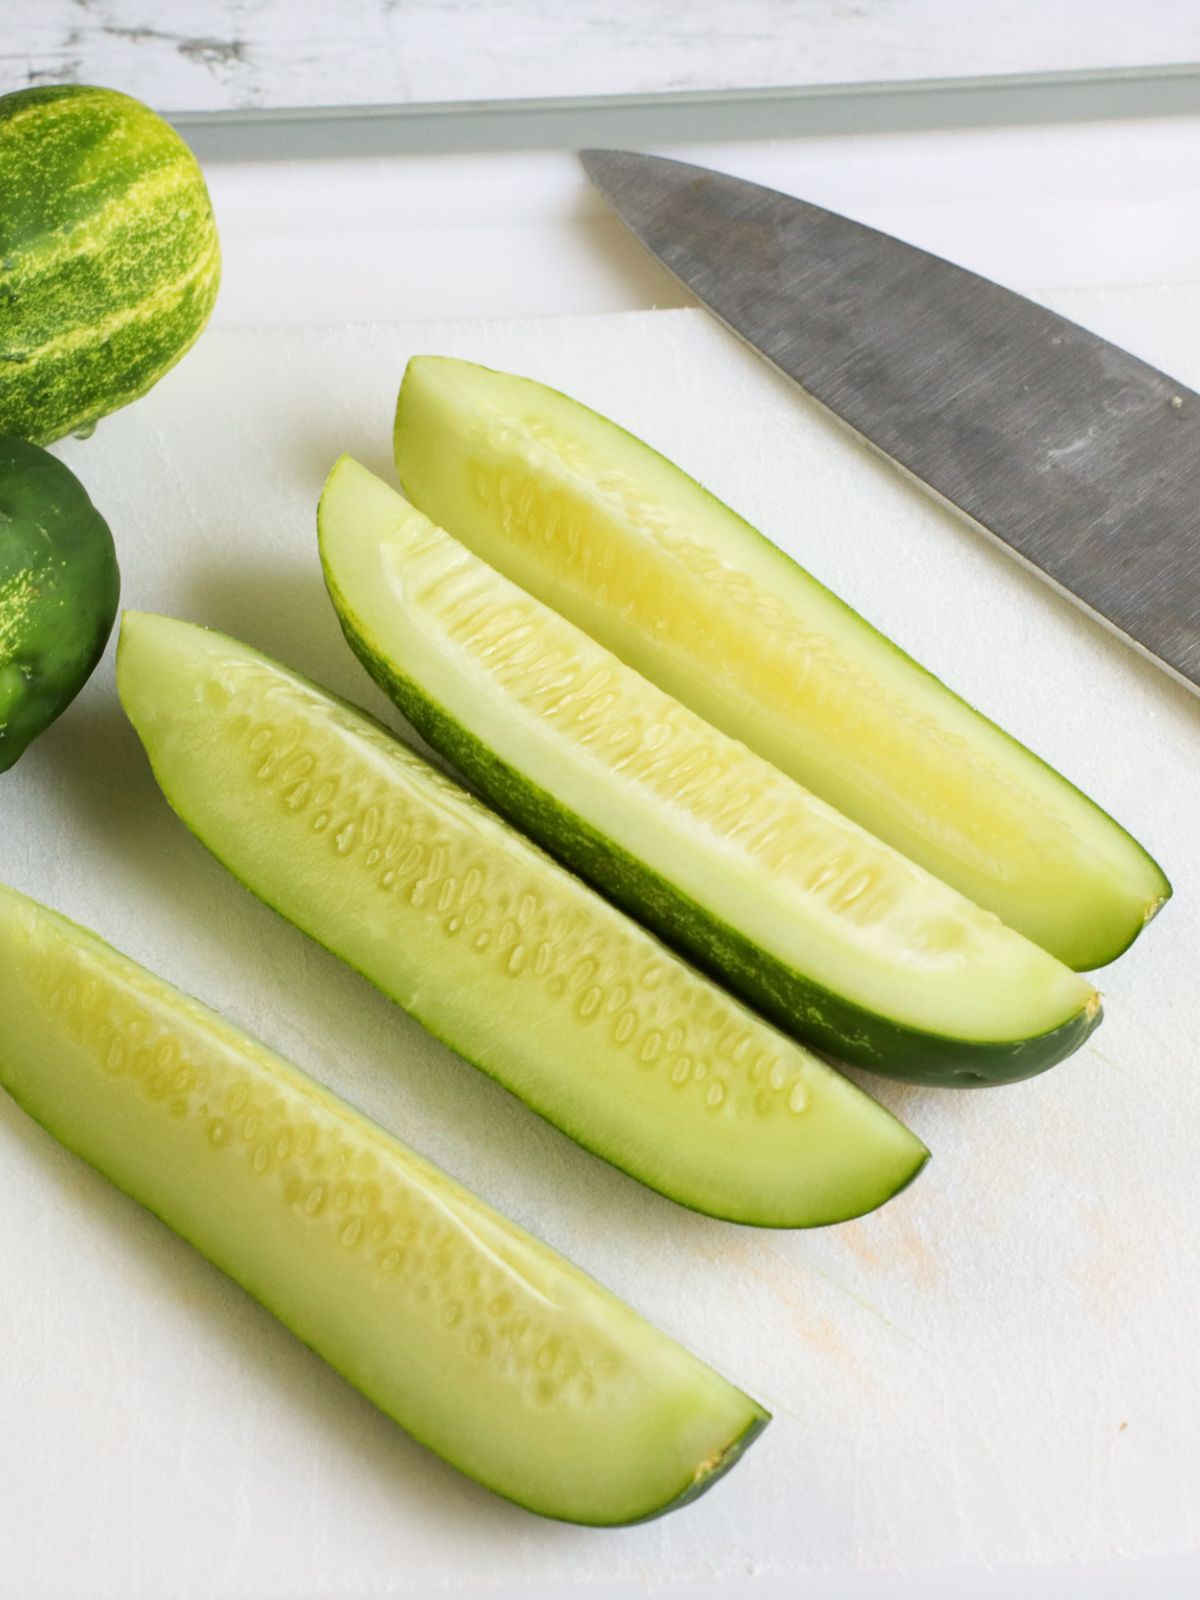 Sliced cucumbers on cutting board.